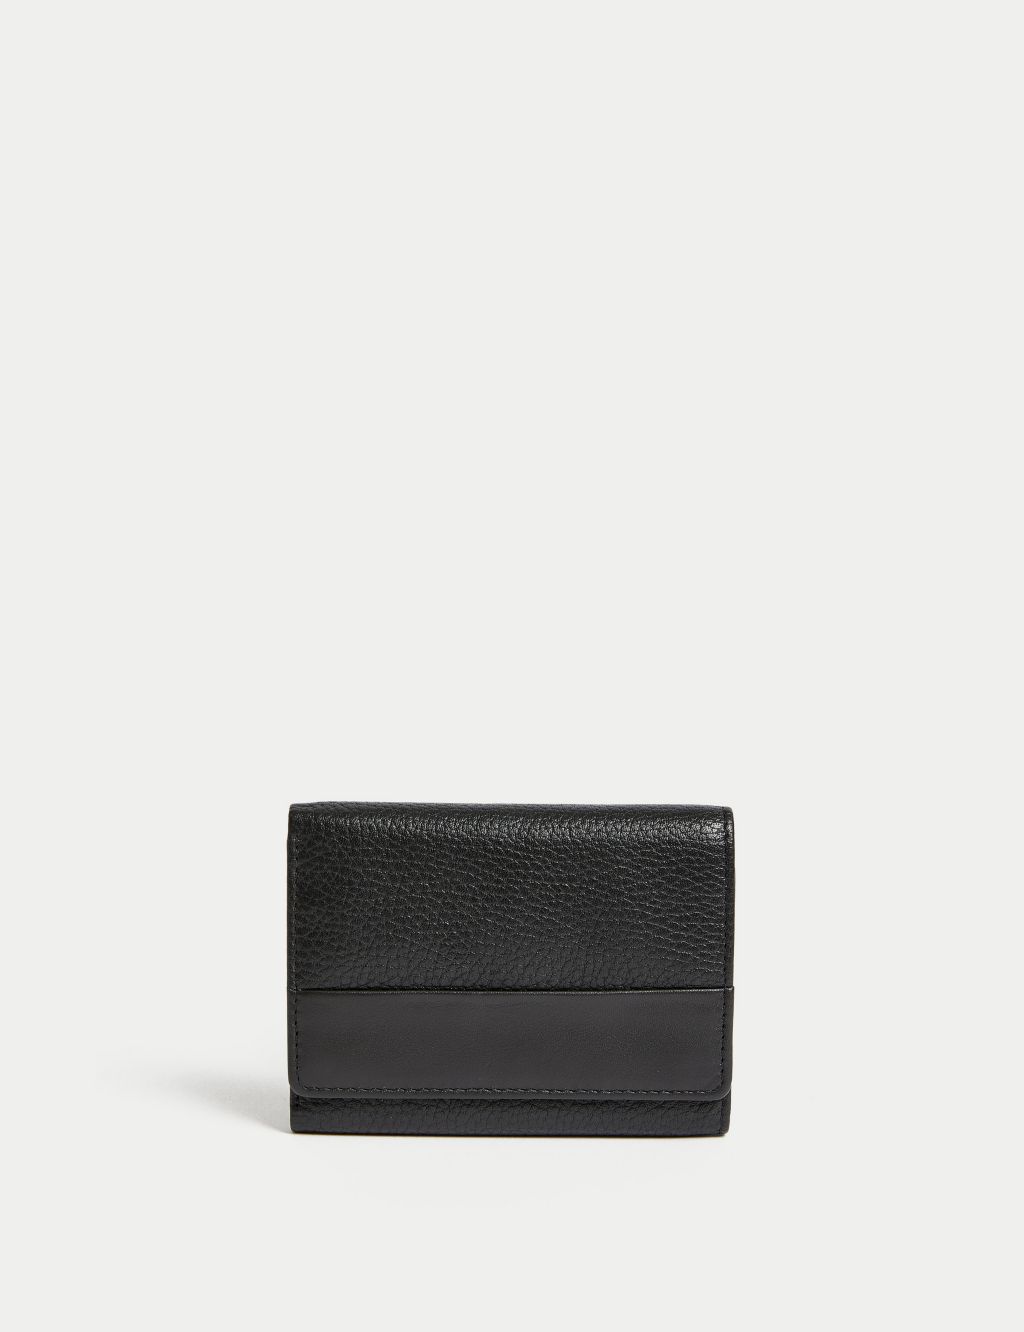 Black floral leather minimalist keychain card wallet